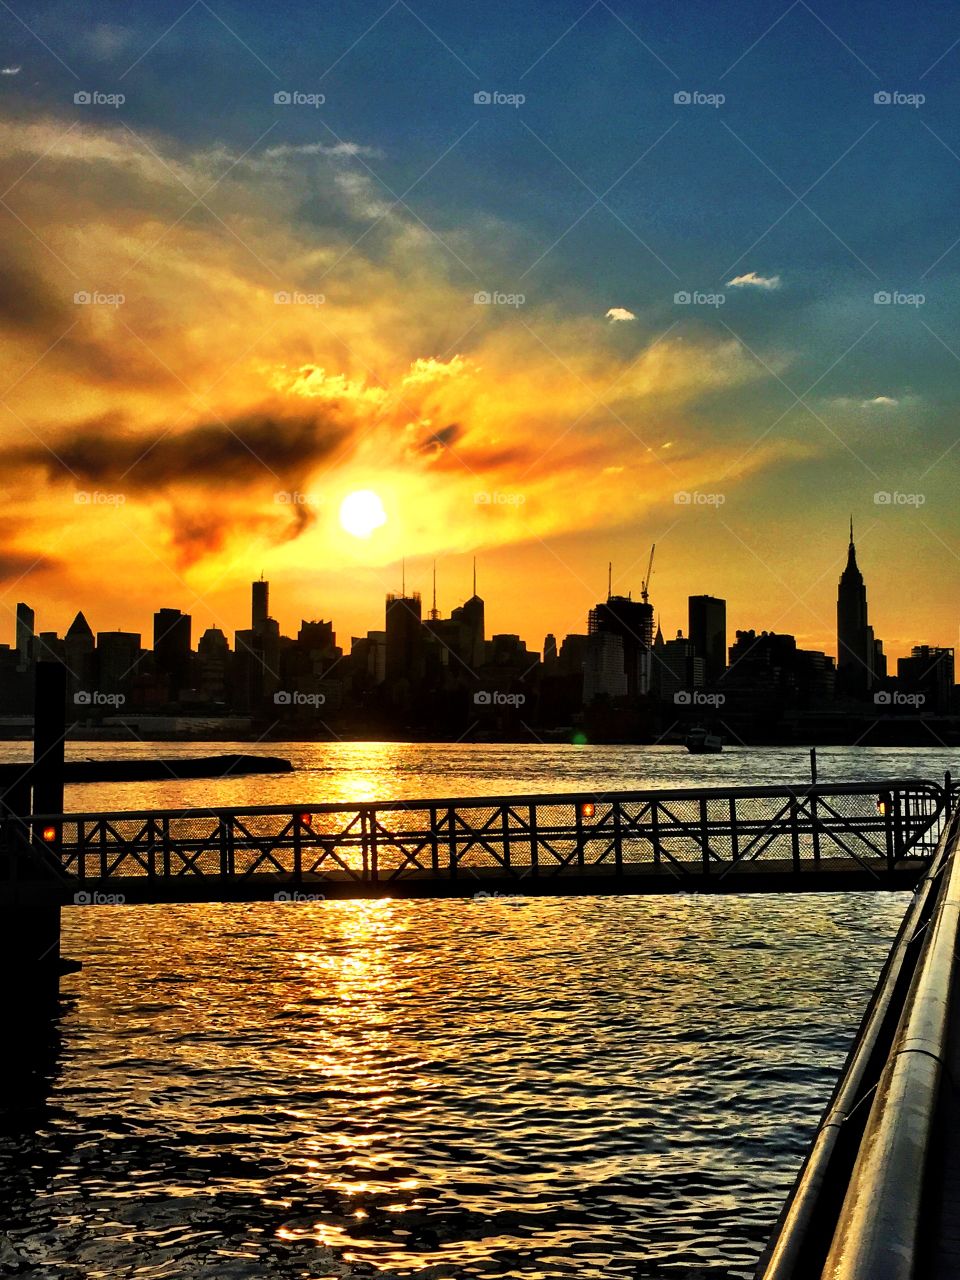 New York City skyline. Sunrise on the Hudson River.. New York City skyline. Sunrise on the Hudson River. iPhone photo.